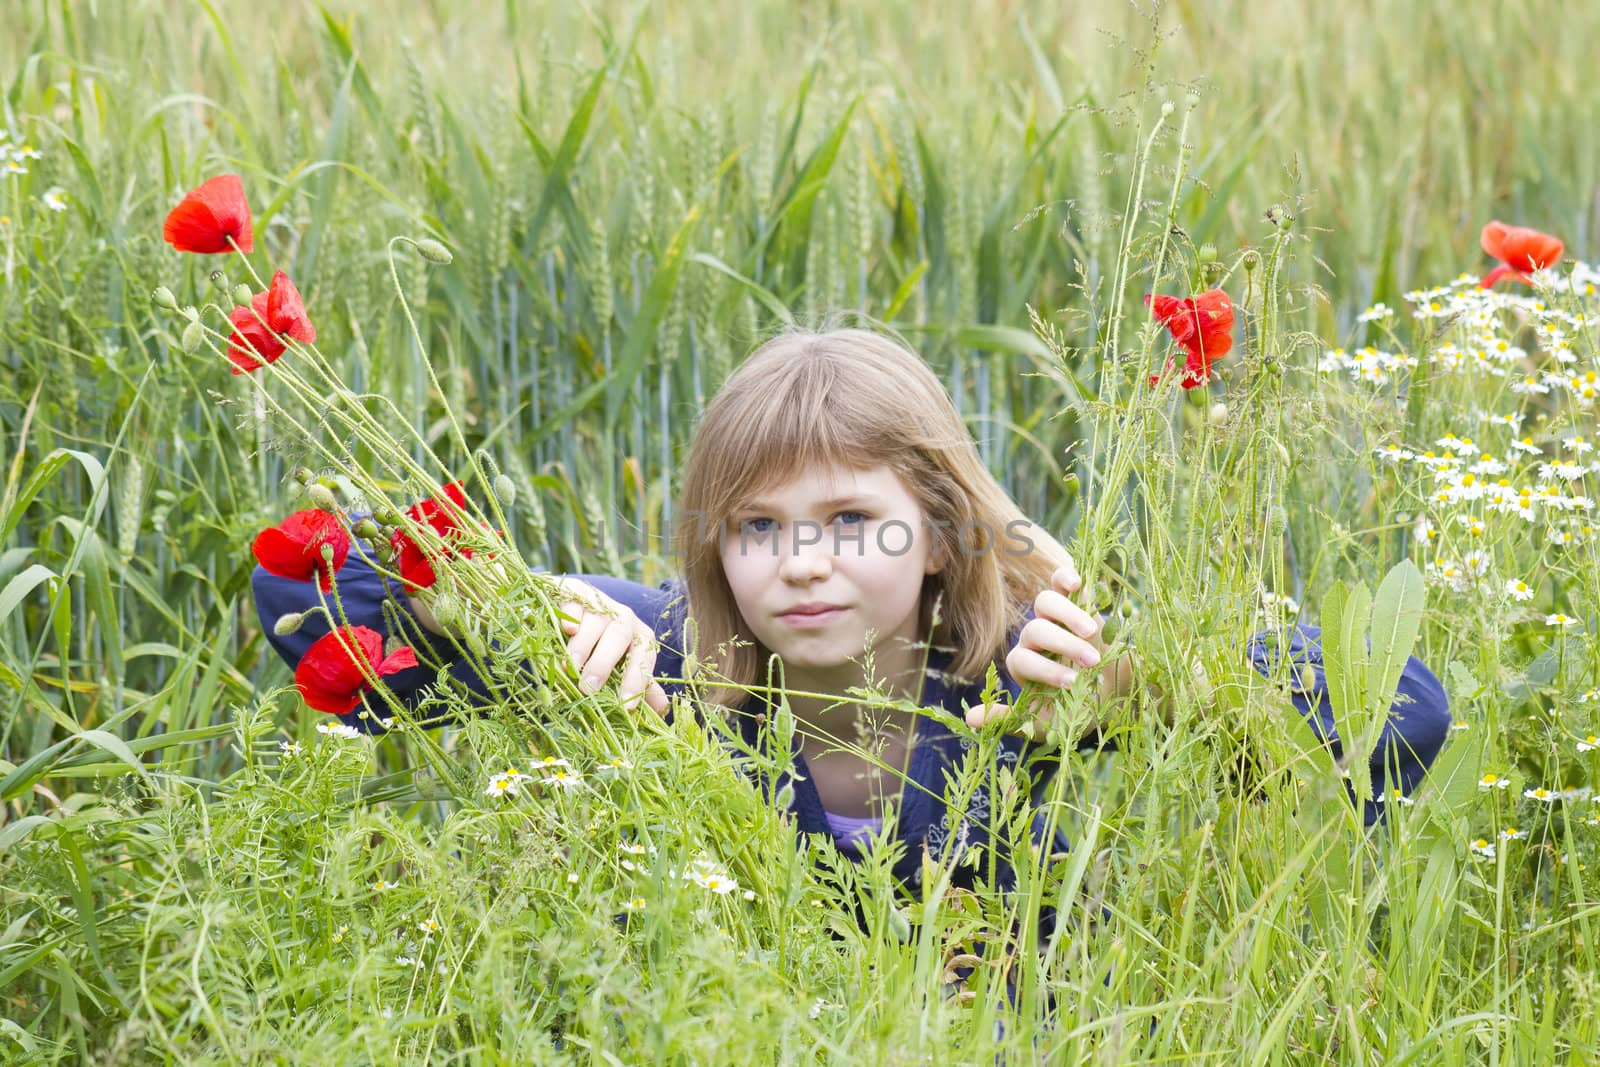 Cute young girl in poppy field by miradrozdowski